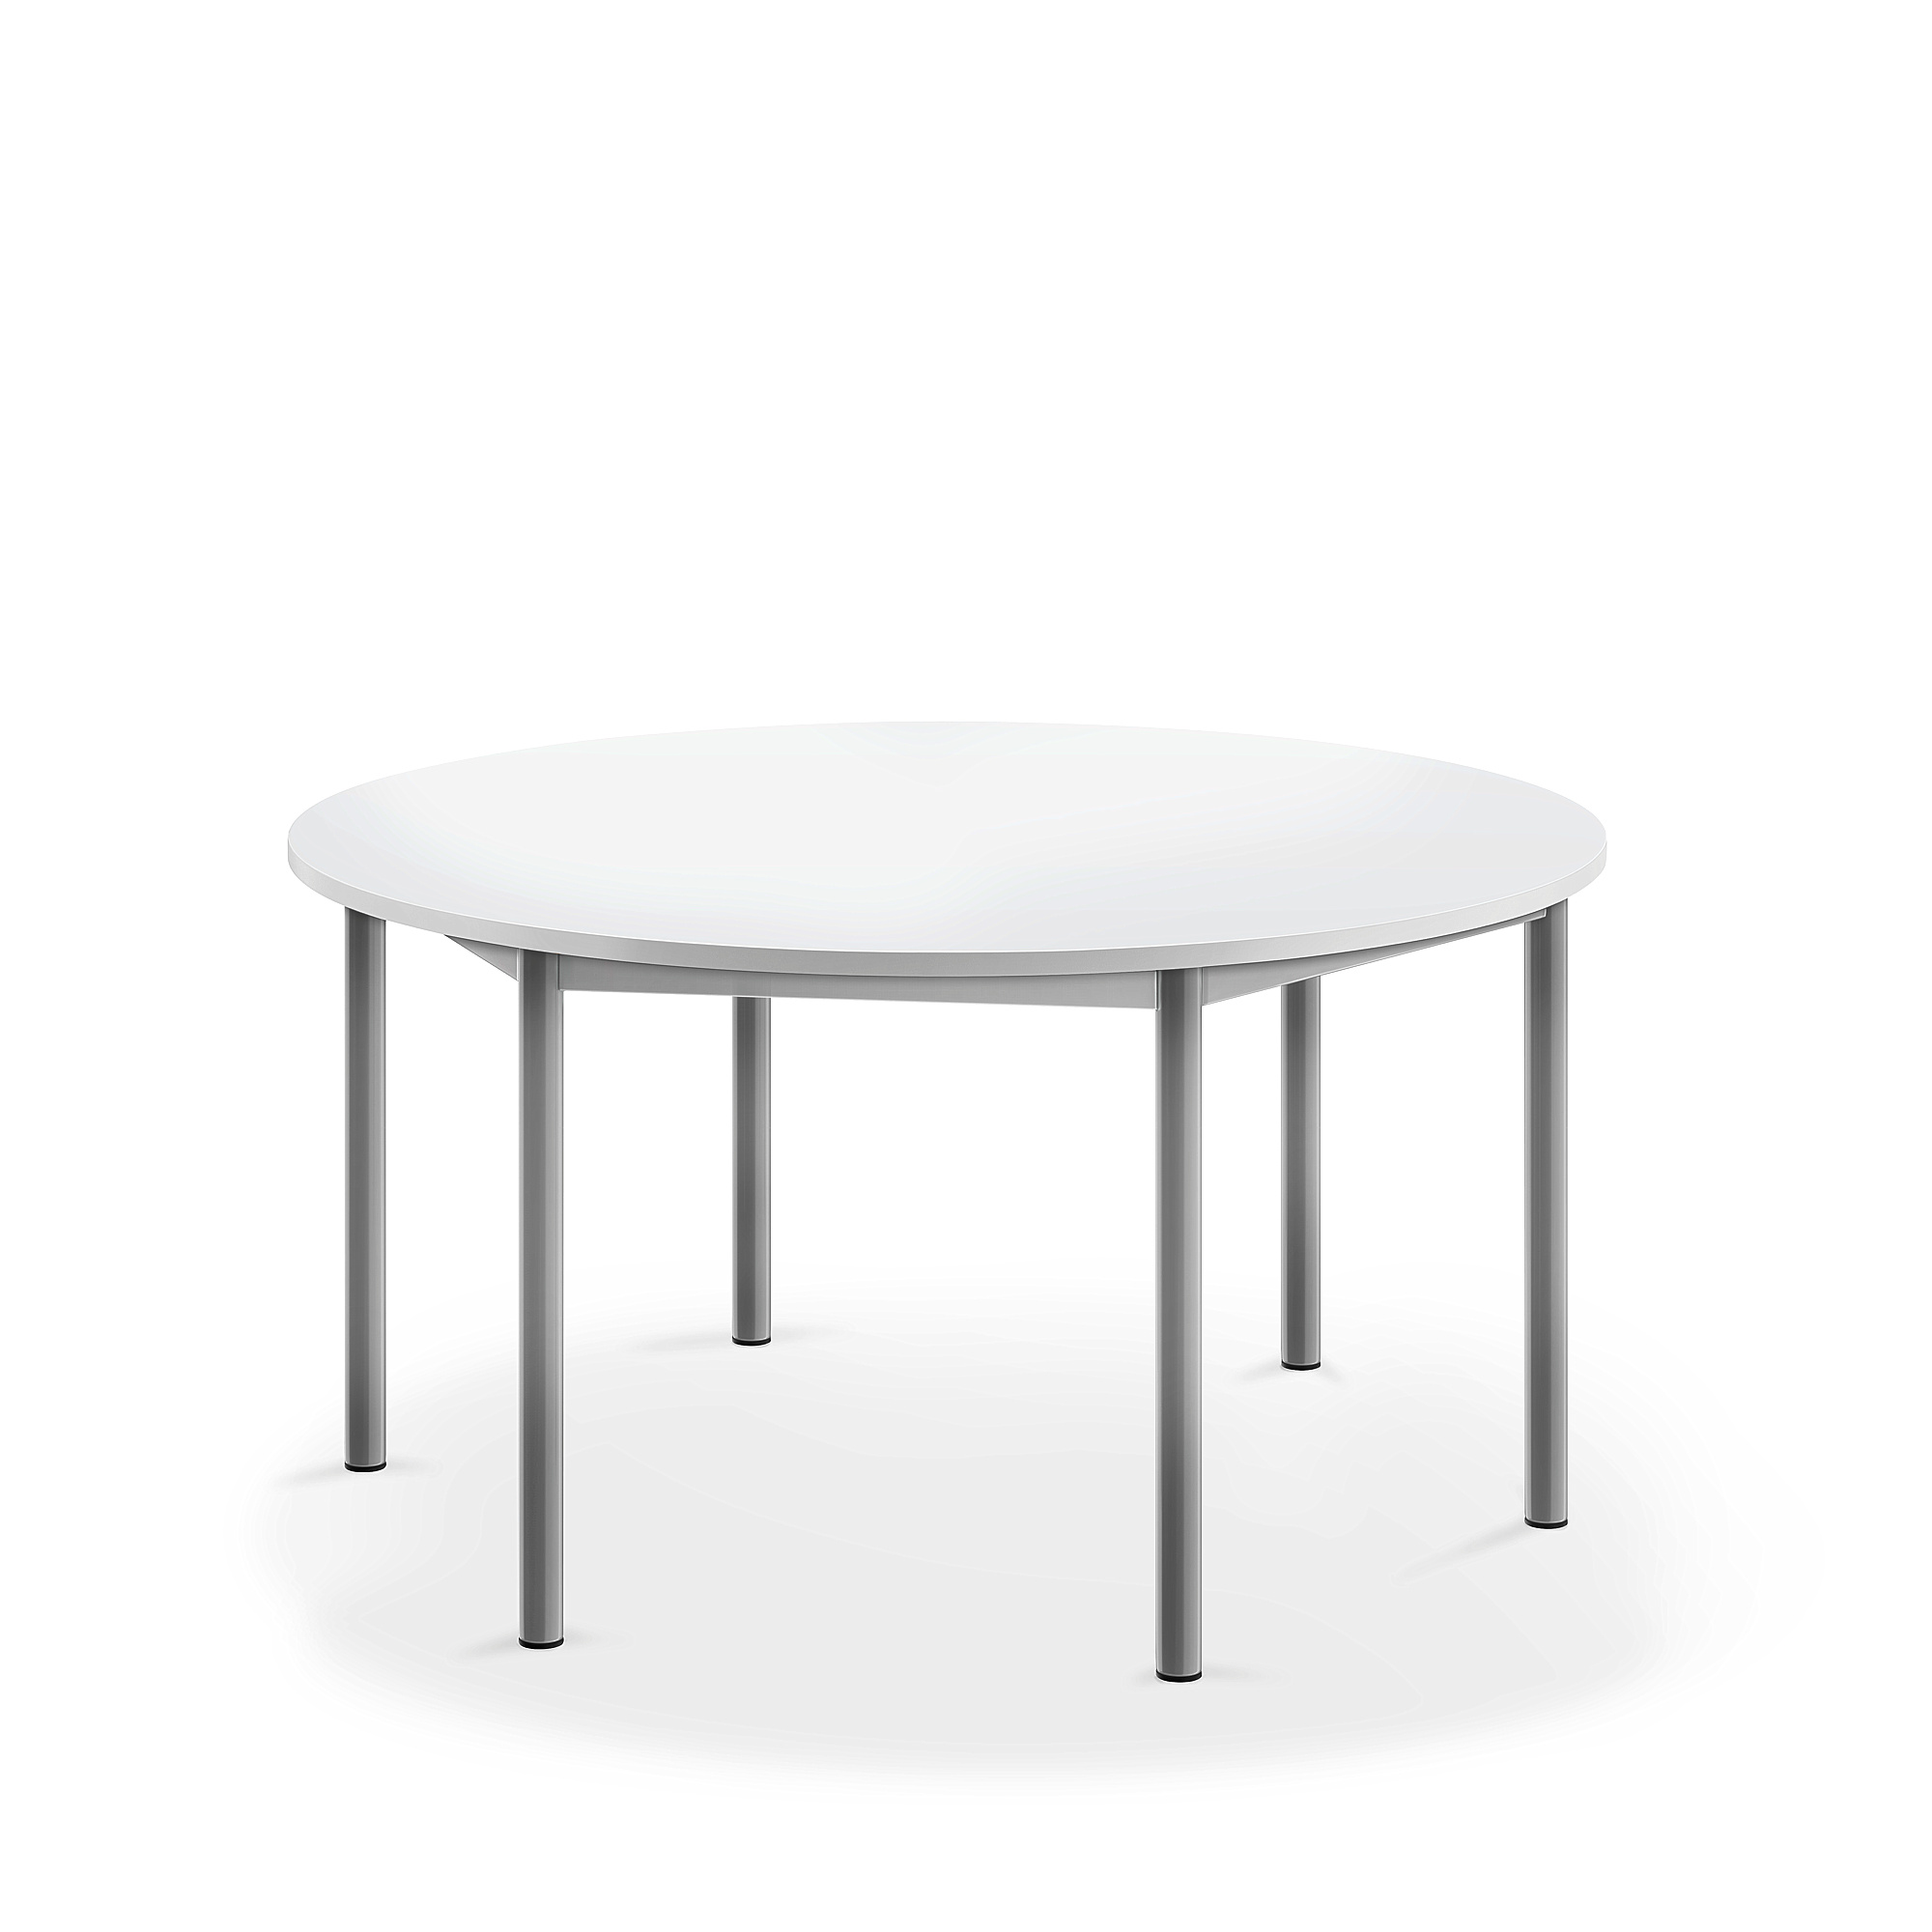 Stůl BORÅS, Ø1200x600 mm, stříbrné nohy, HPL deska, bílá